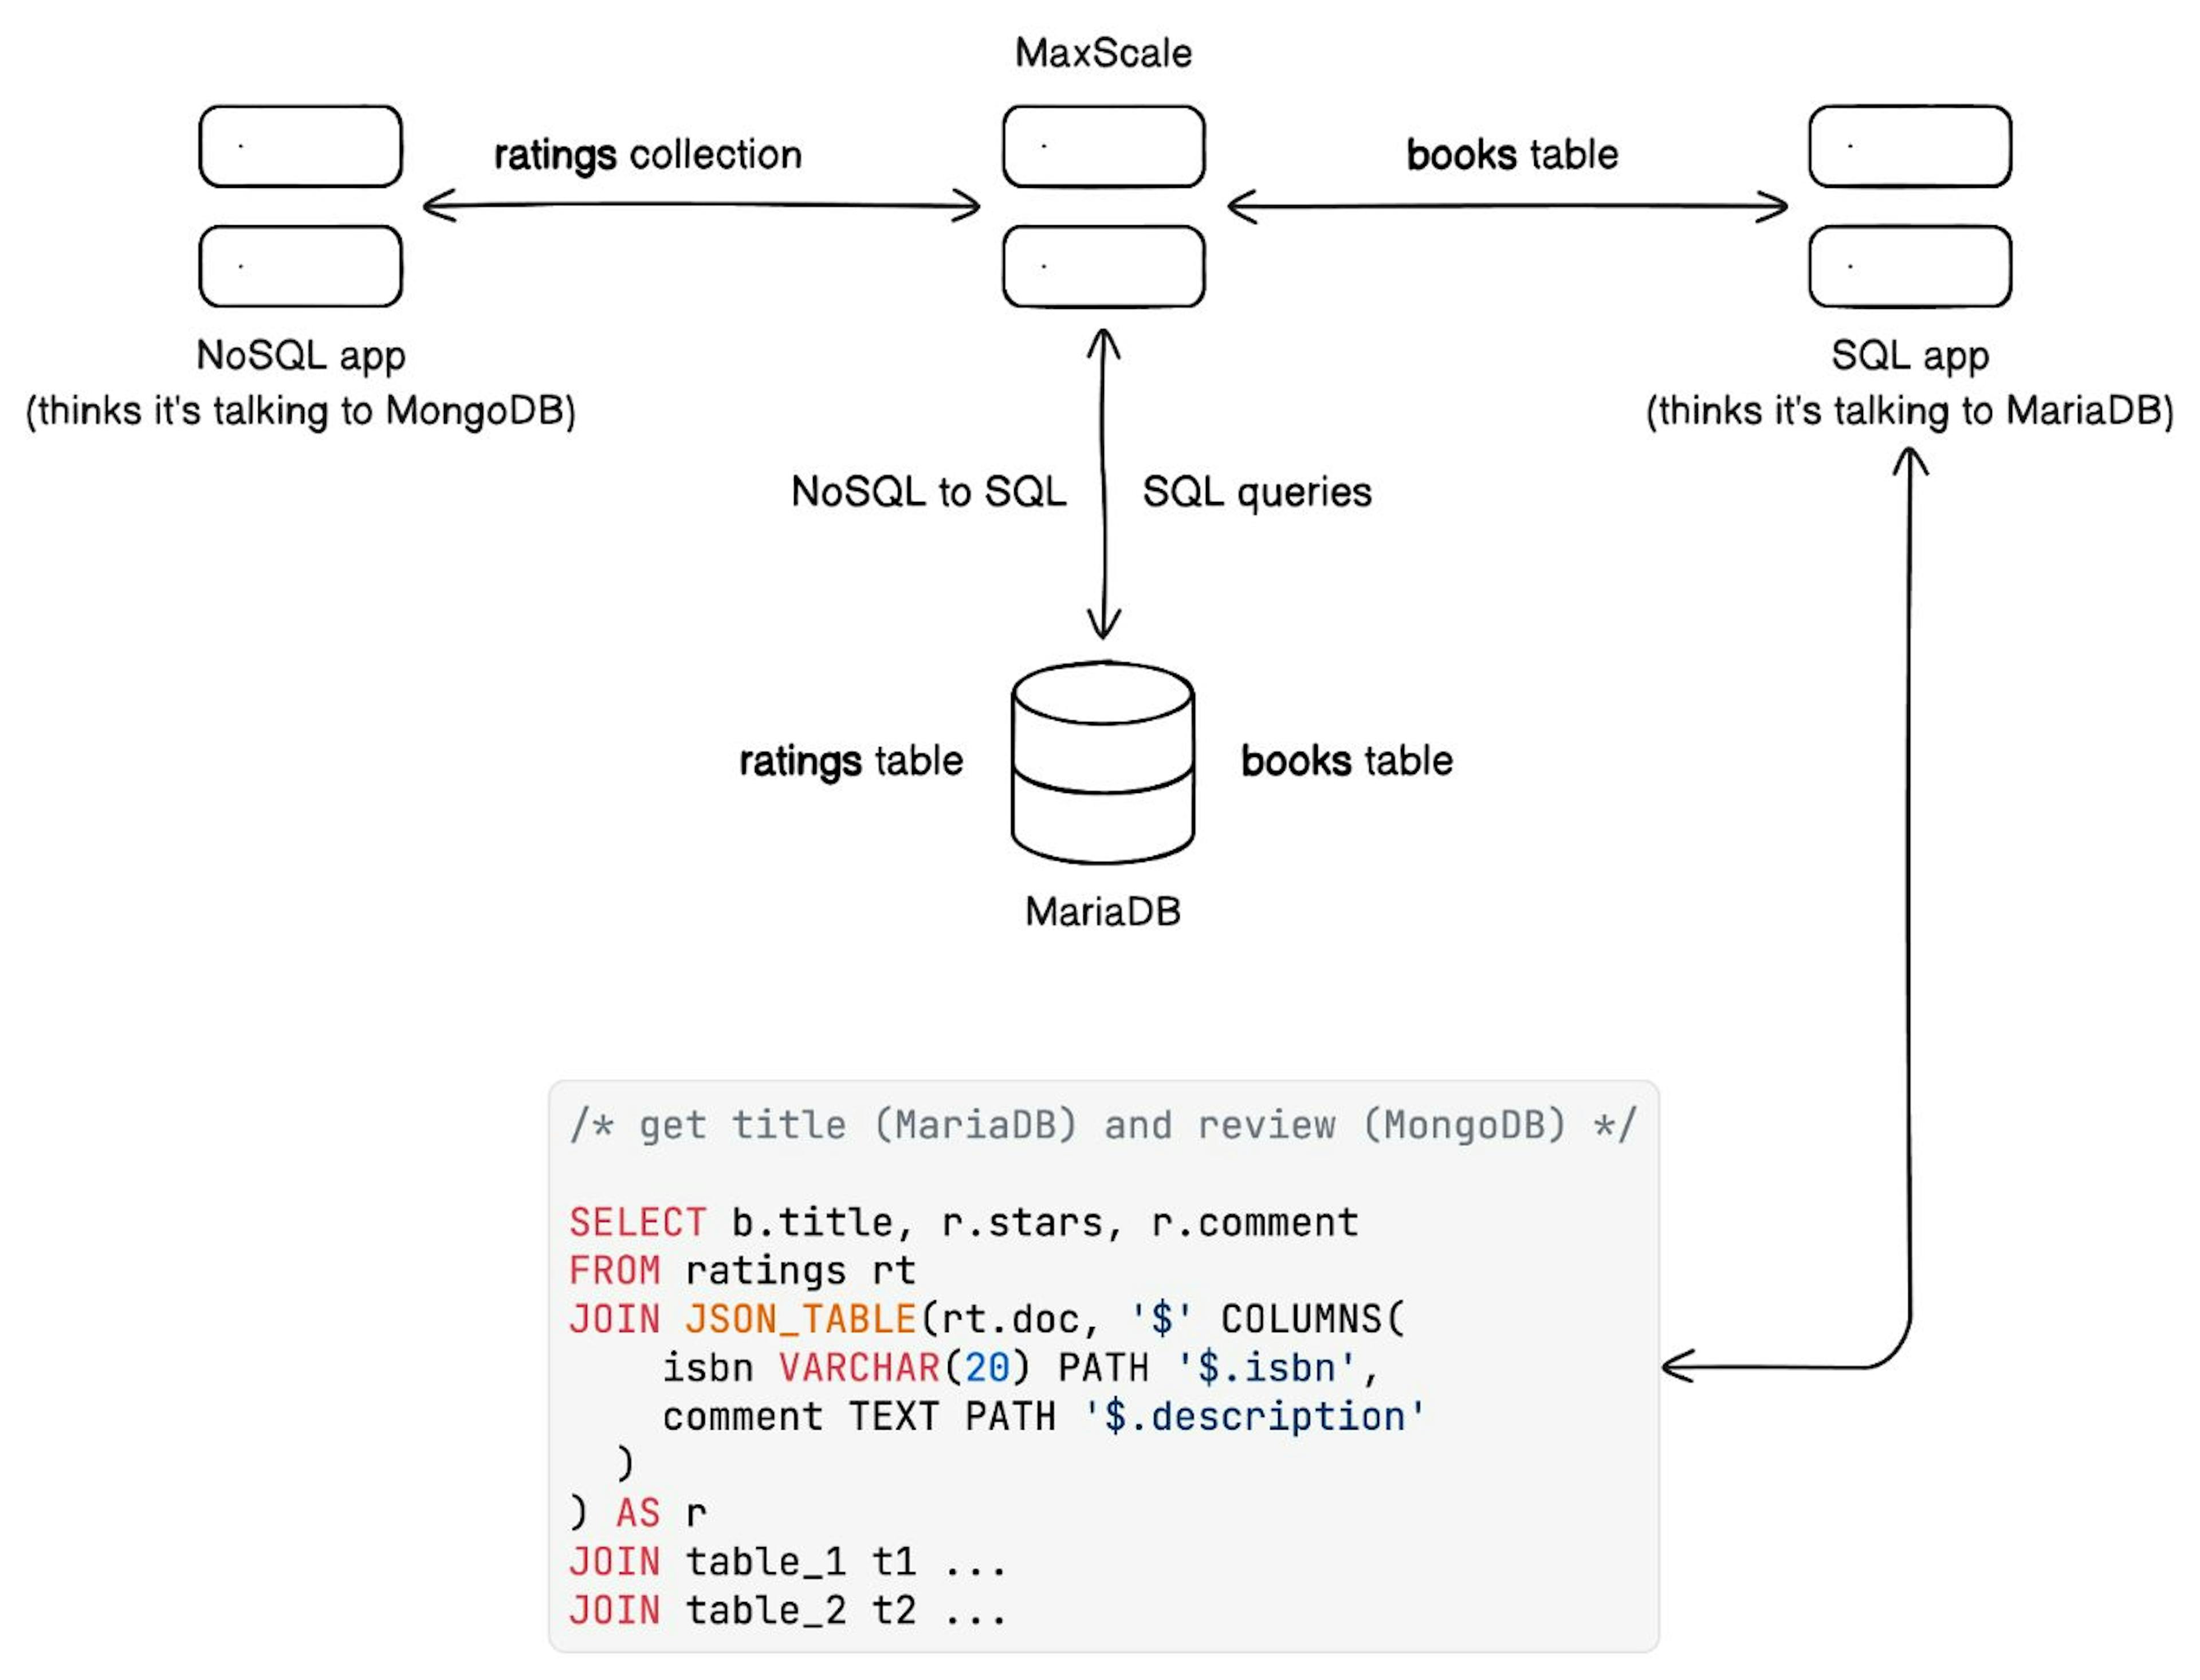 MaxScale allows a SQL application to consume NoSQL data